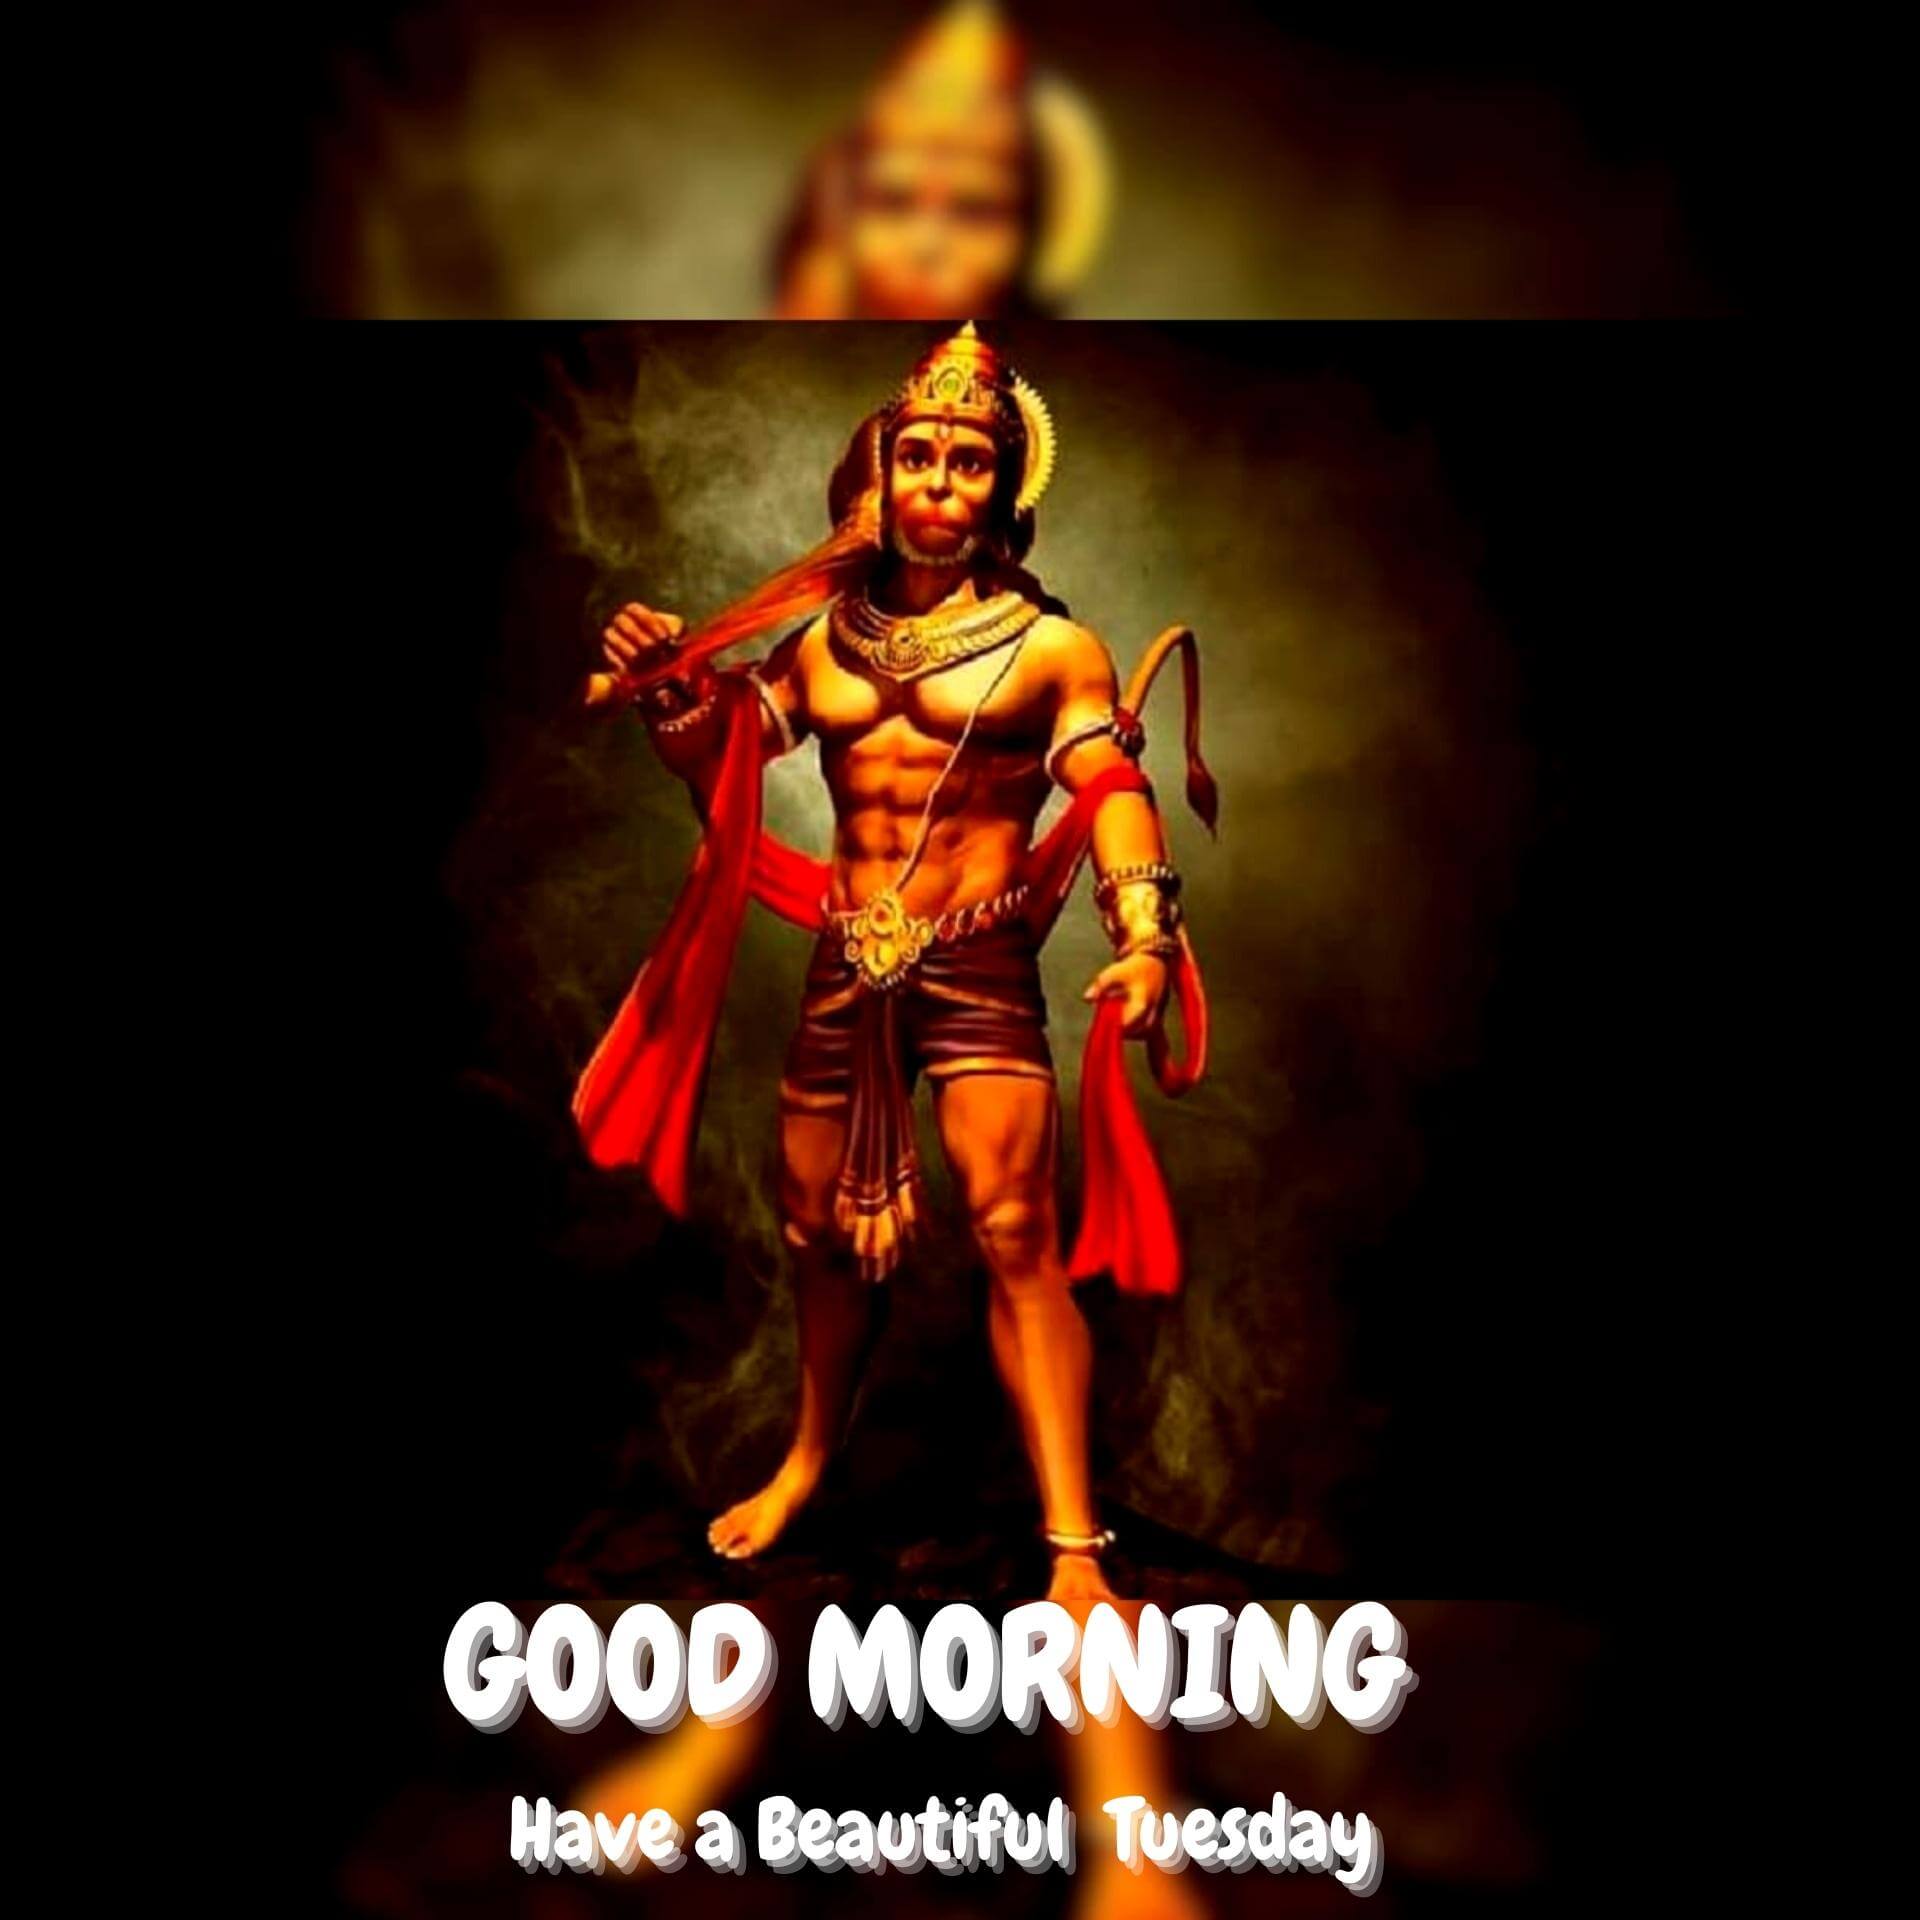 Tuesday good morning Pics Wallpaper With Hanuman JI